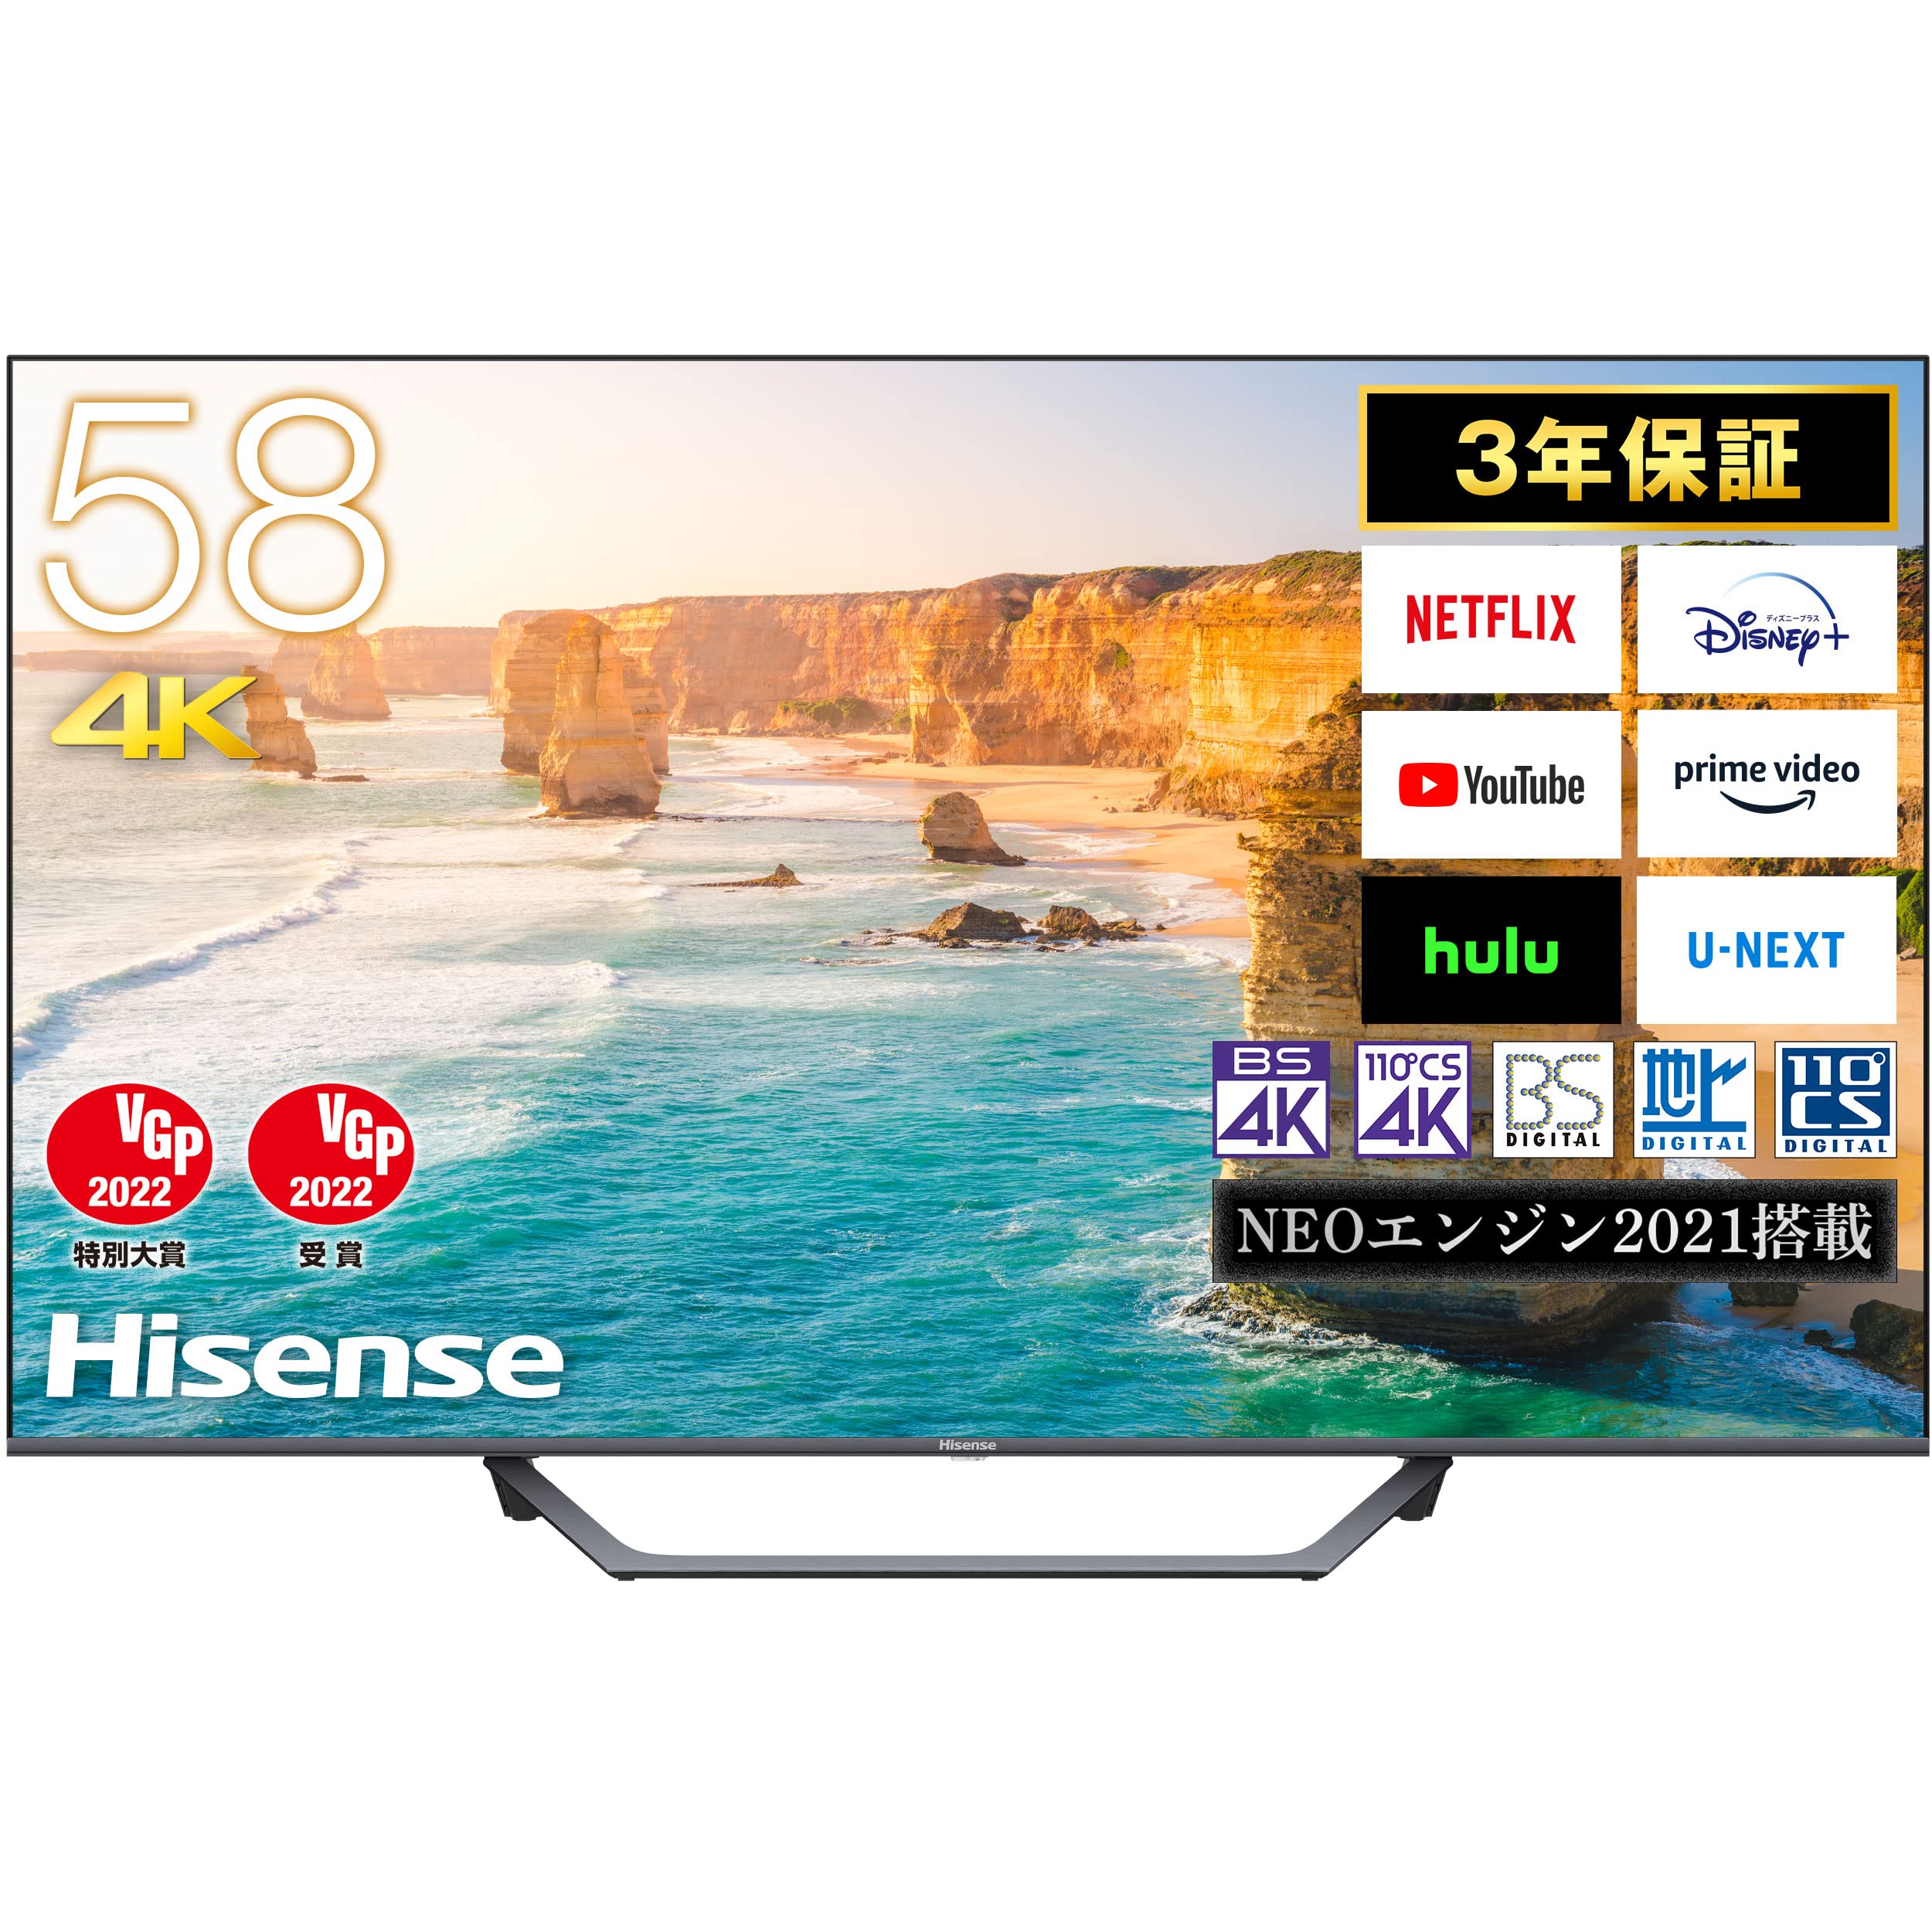 Buy Hisense 58U7FG 58V LCD TV, Built-in 4K Tuner, Internet Video